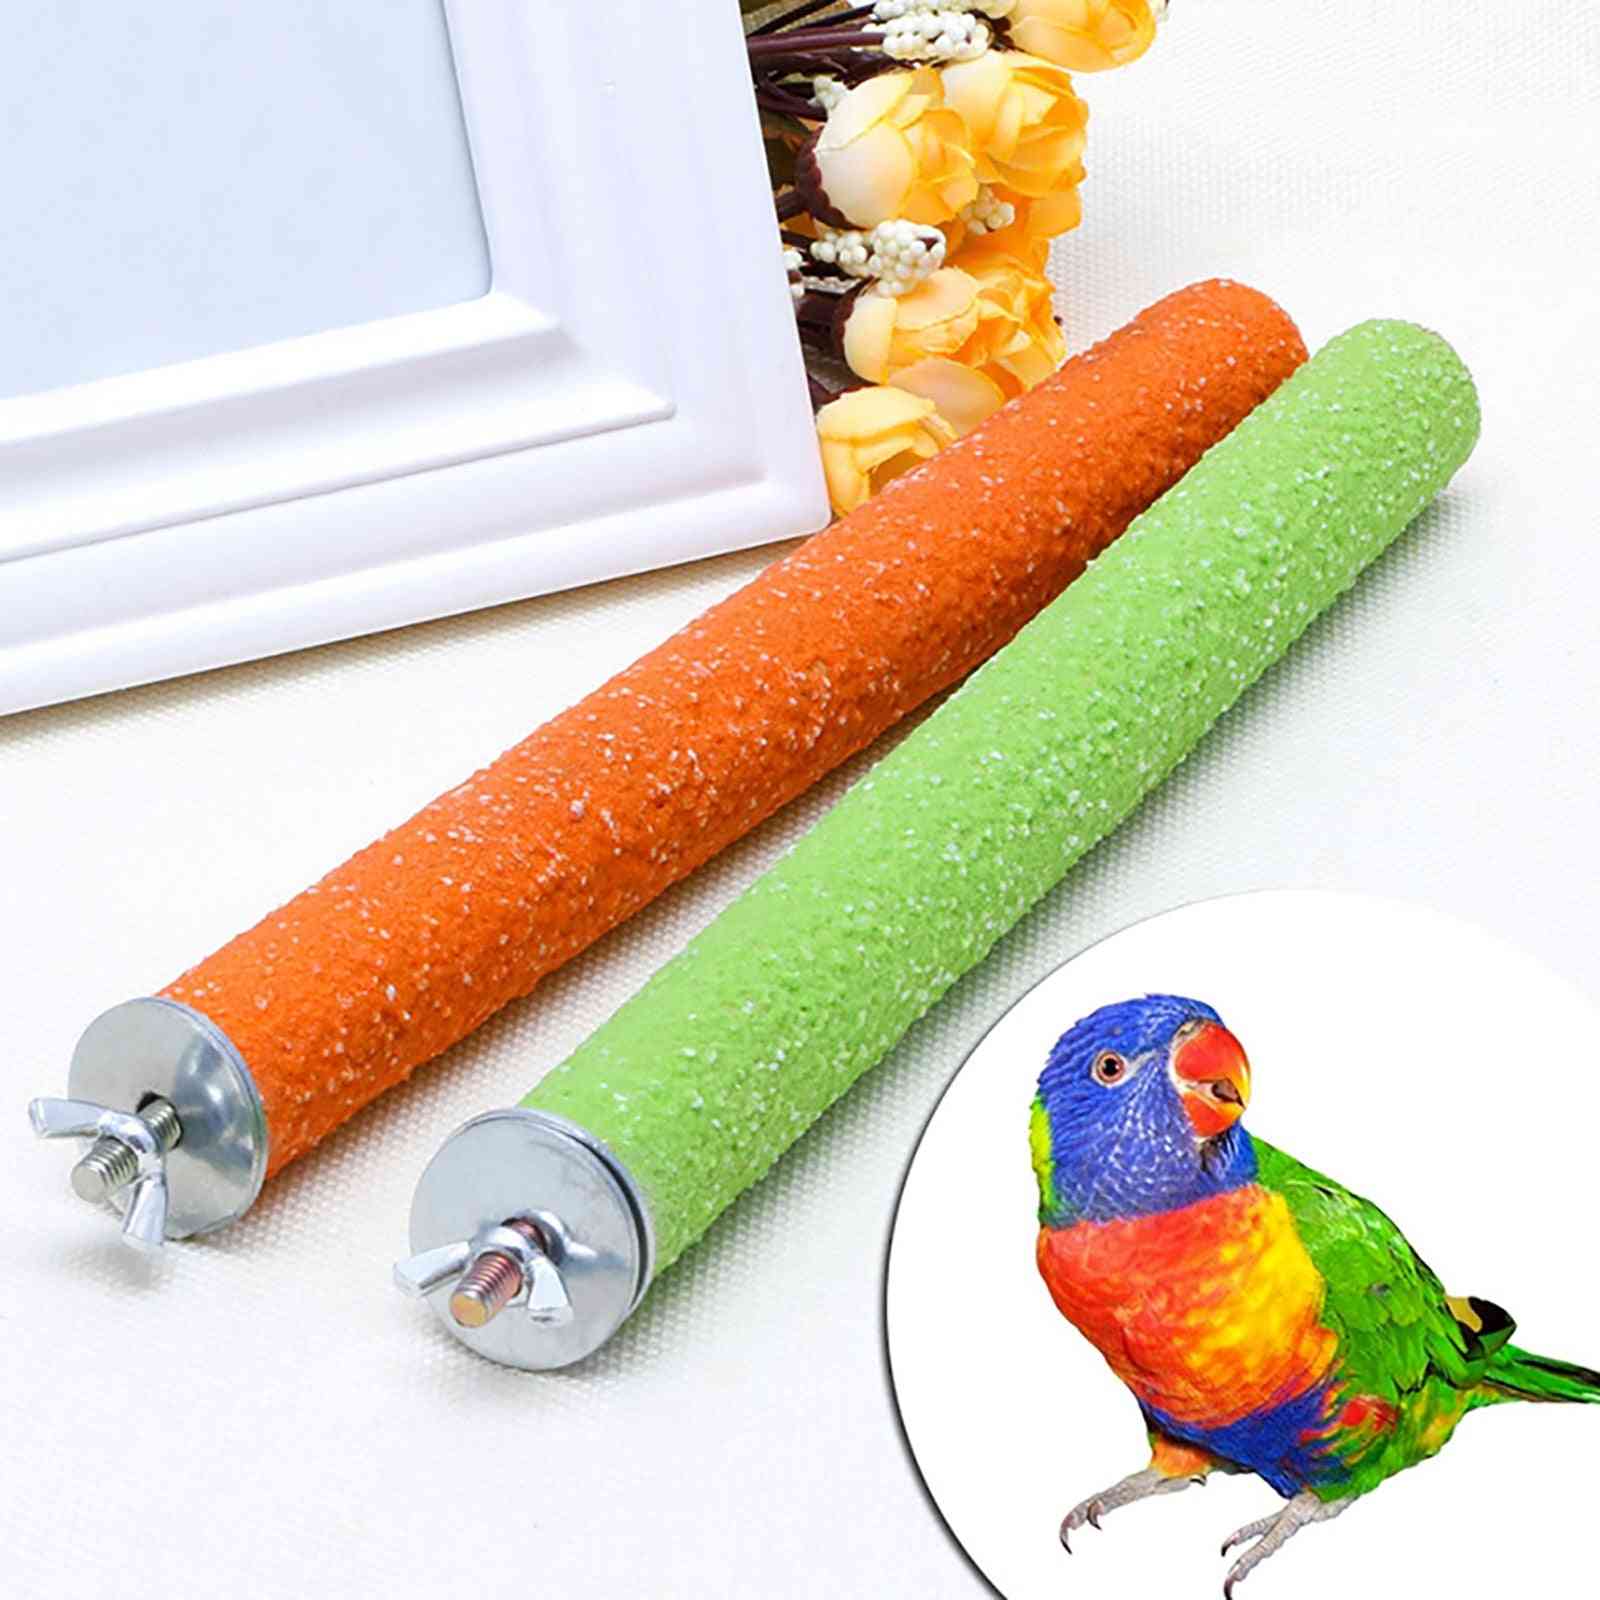 Bird Parrot Perch Stand Holder - Grinding Claw Pet Cage Platform Accessories Chew Toy Bird Supplies